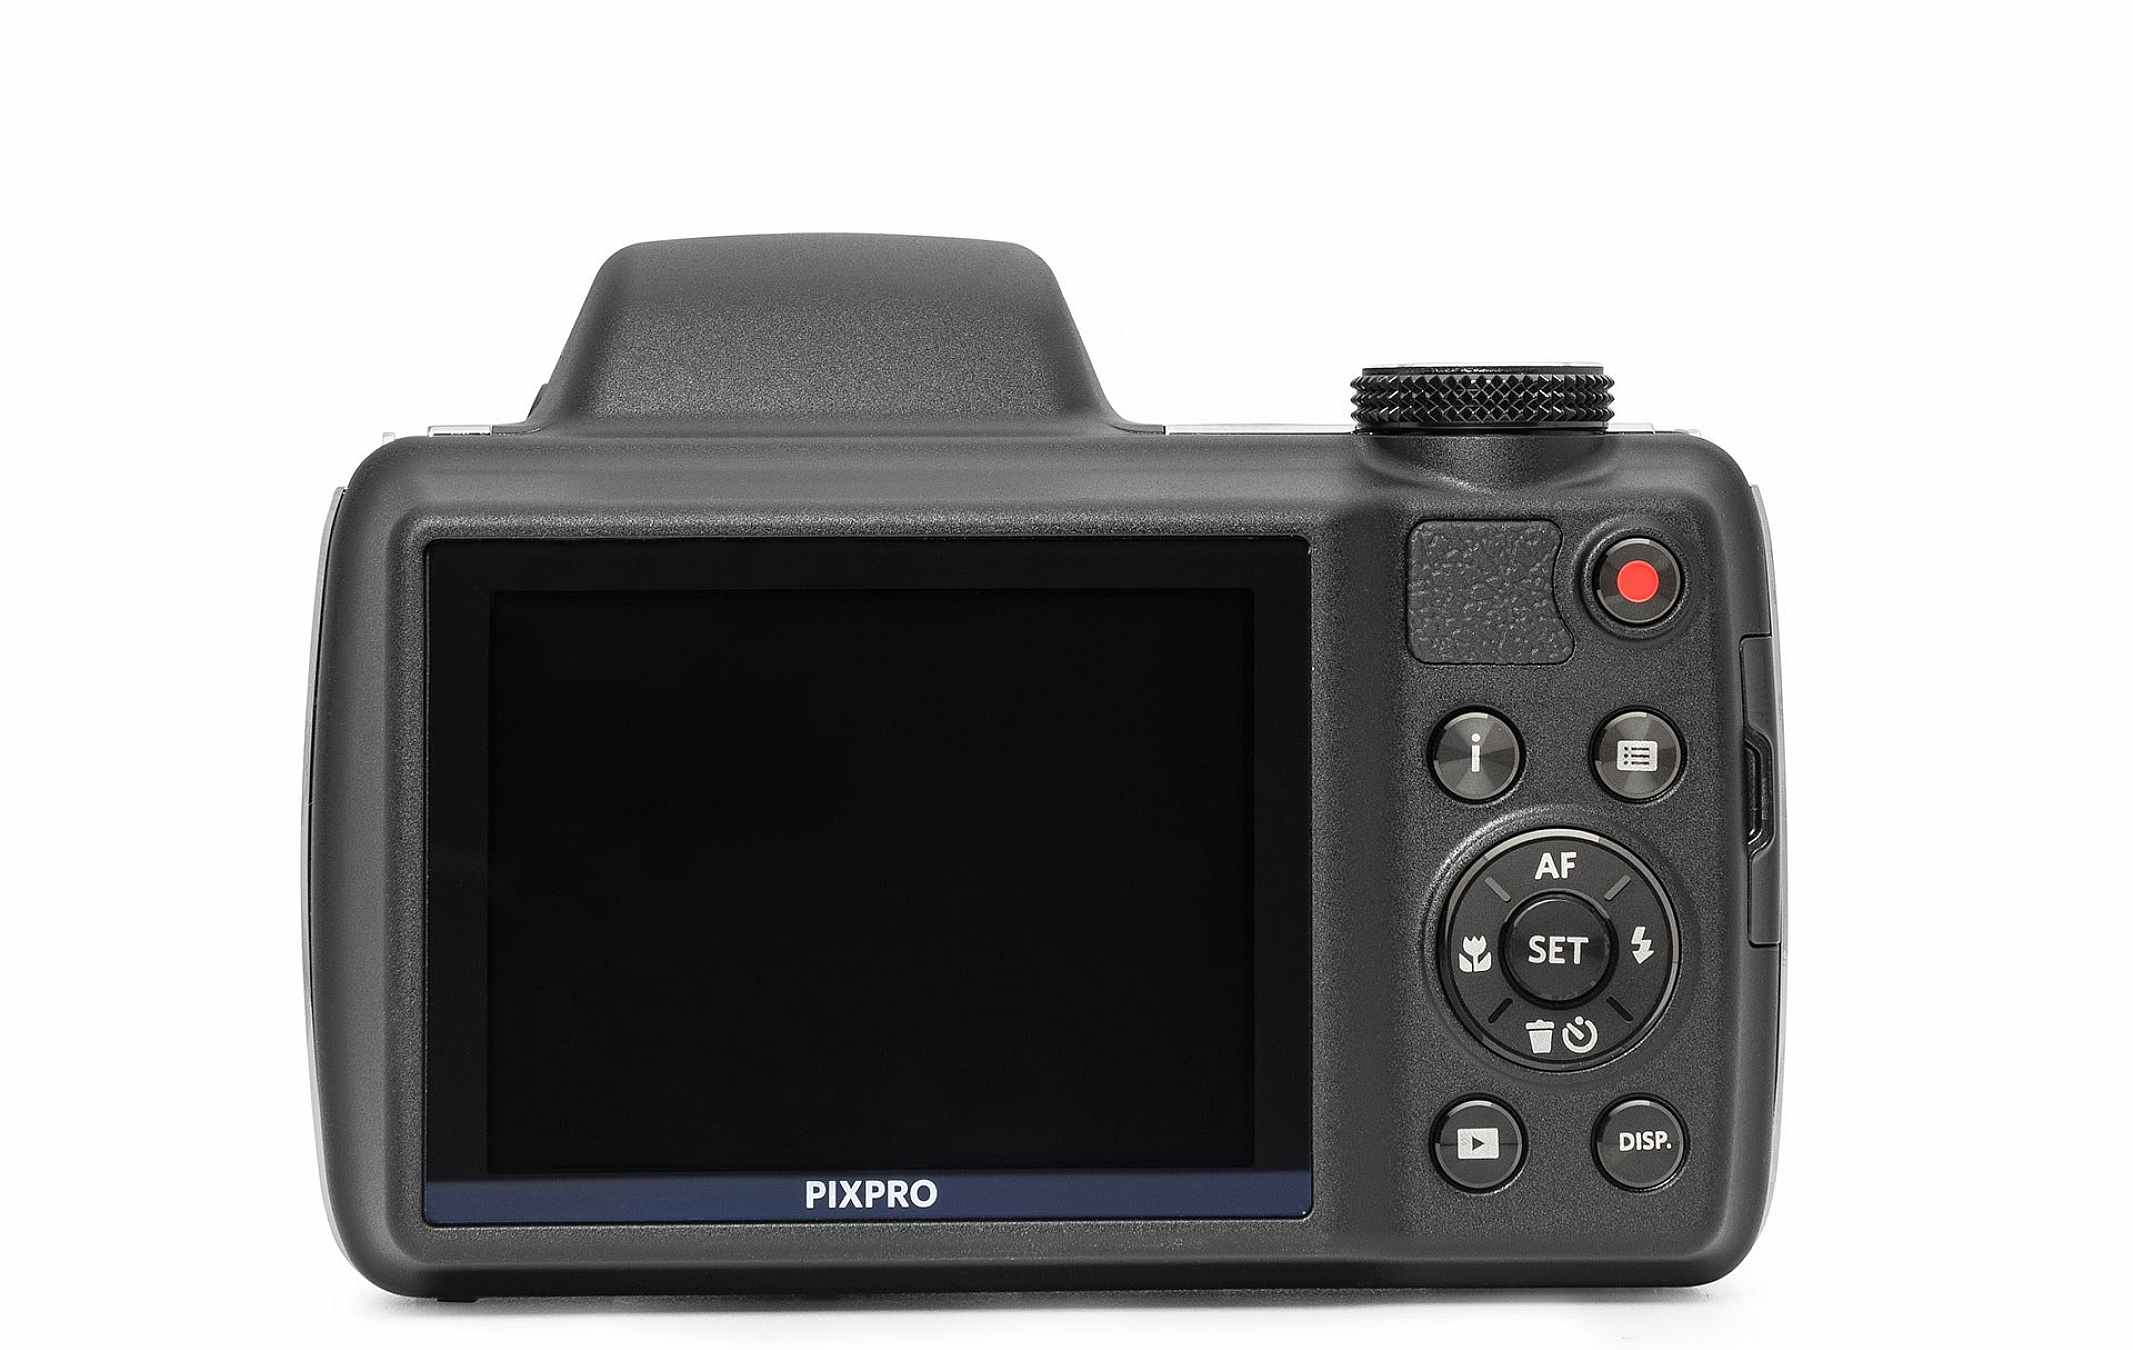 KODAK PIXPRO AZ528 DIGITAL CAMERA (BLACK) Camera tek